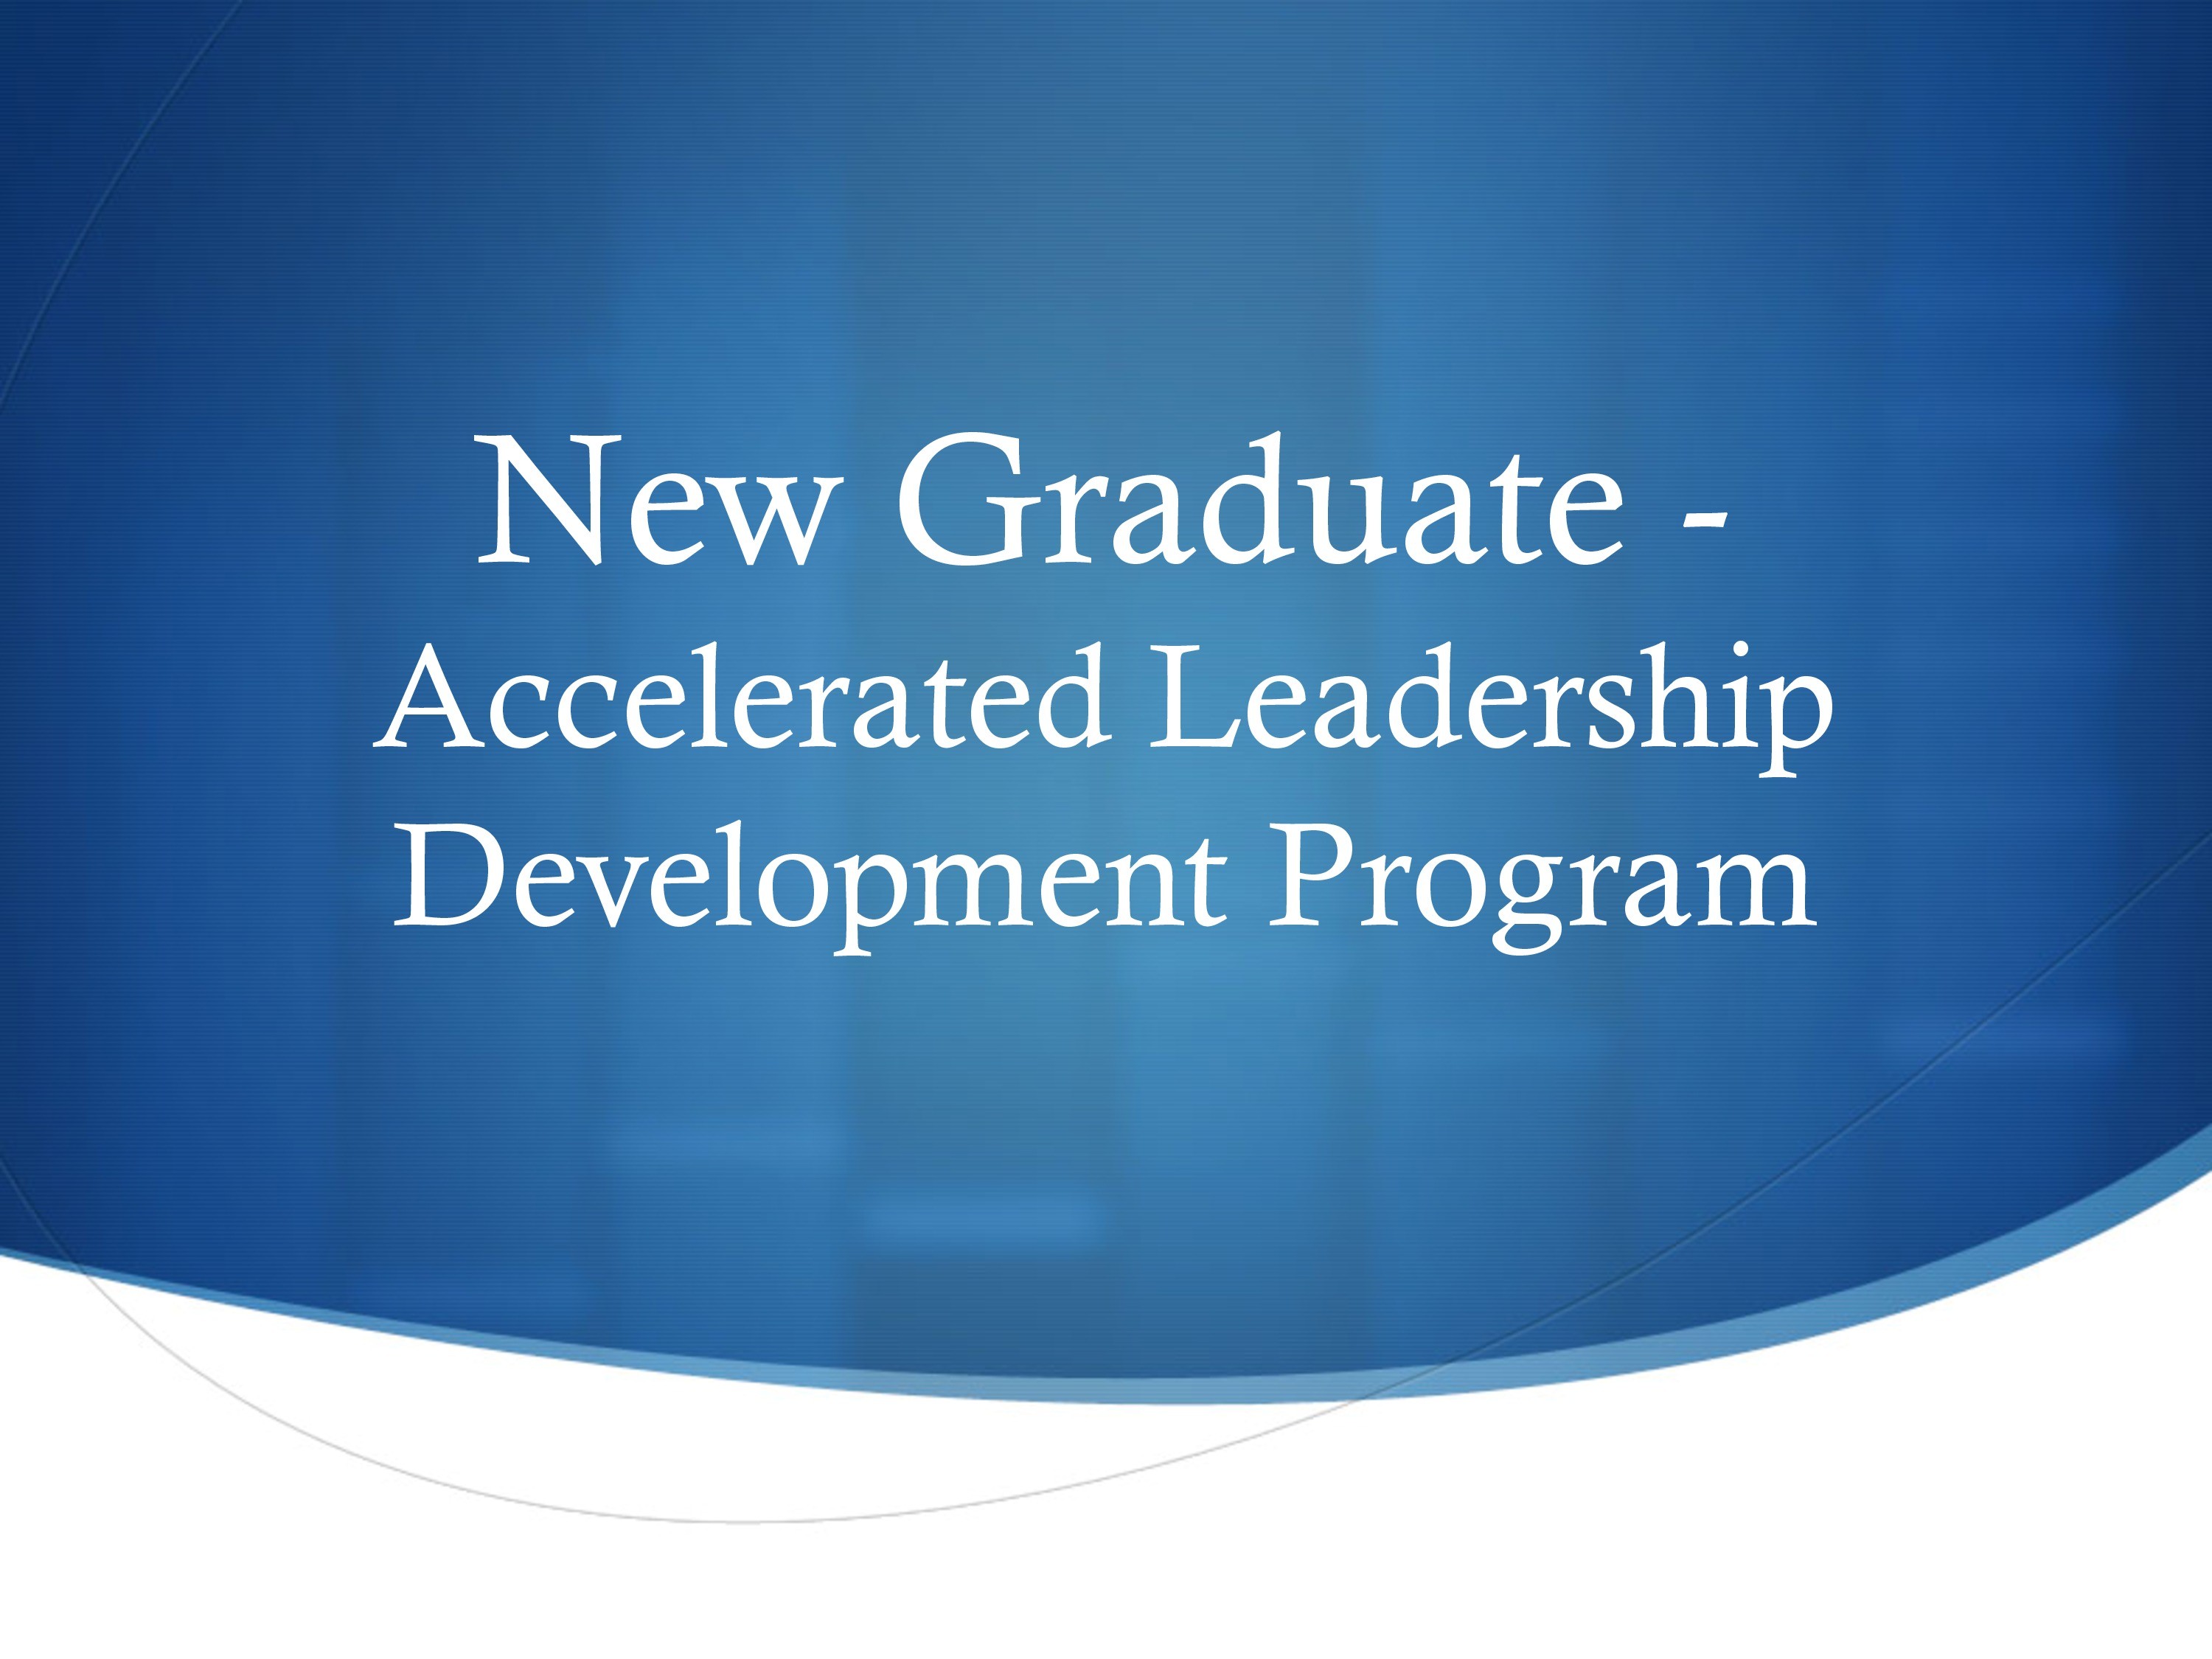 New Graduate - Accelerated Leadership Development Program